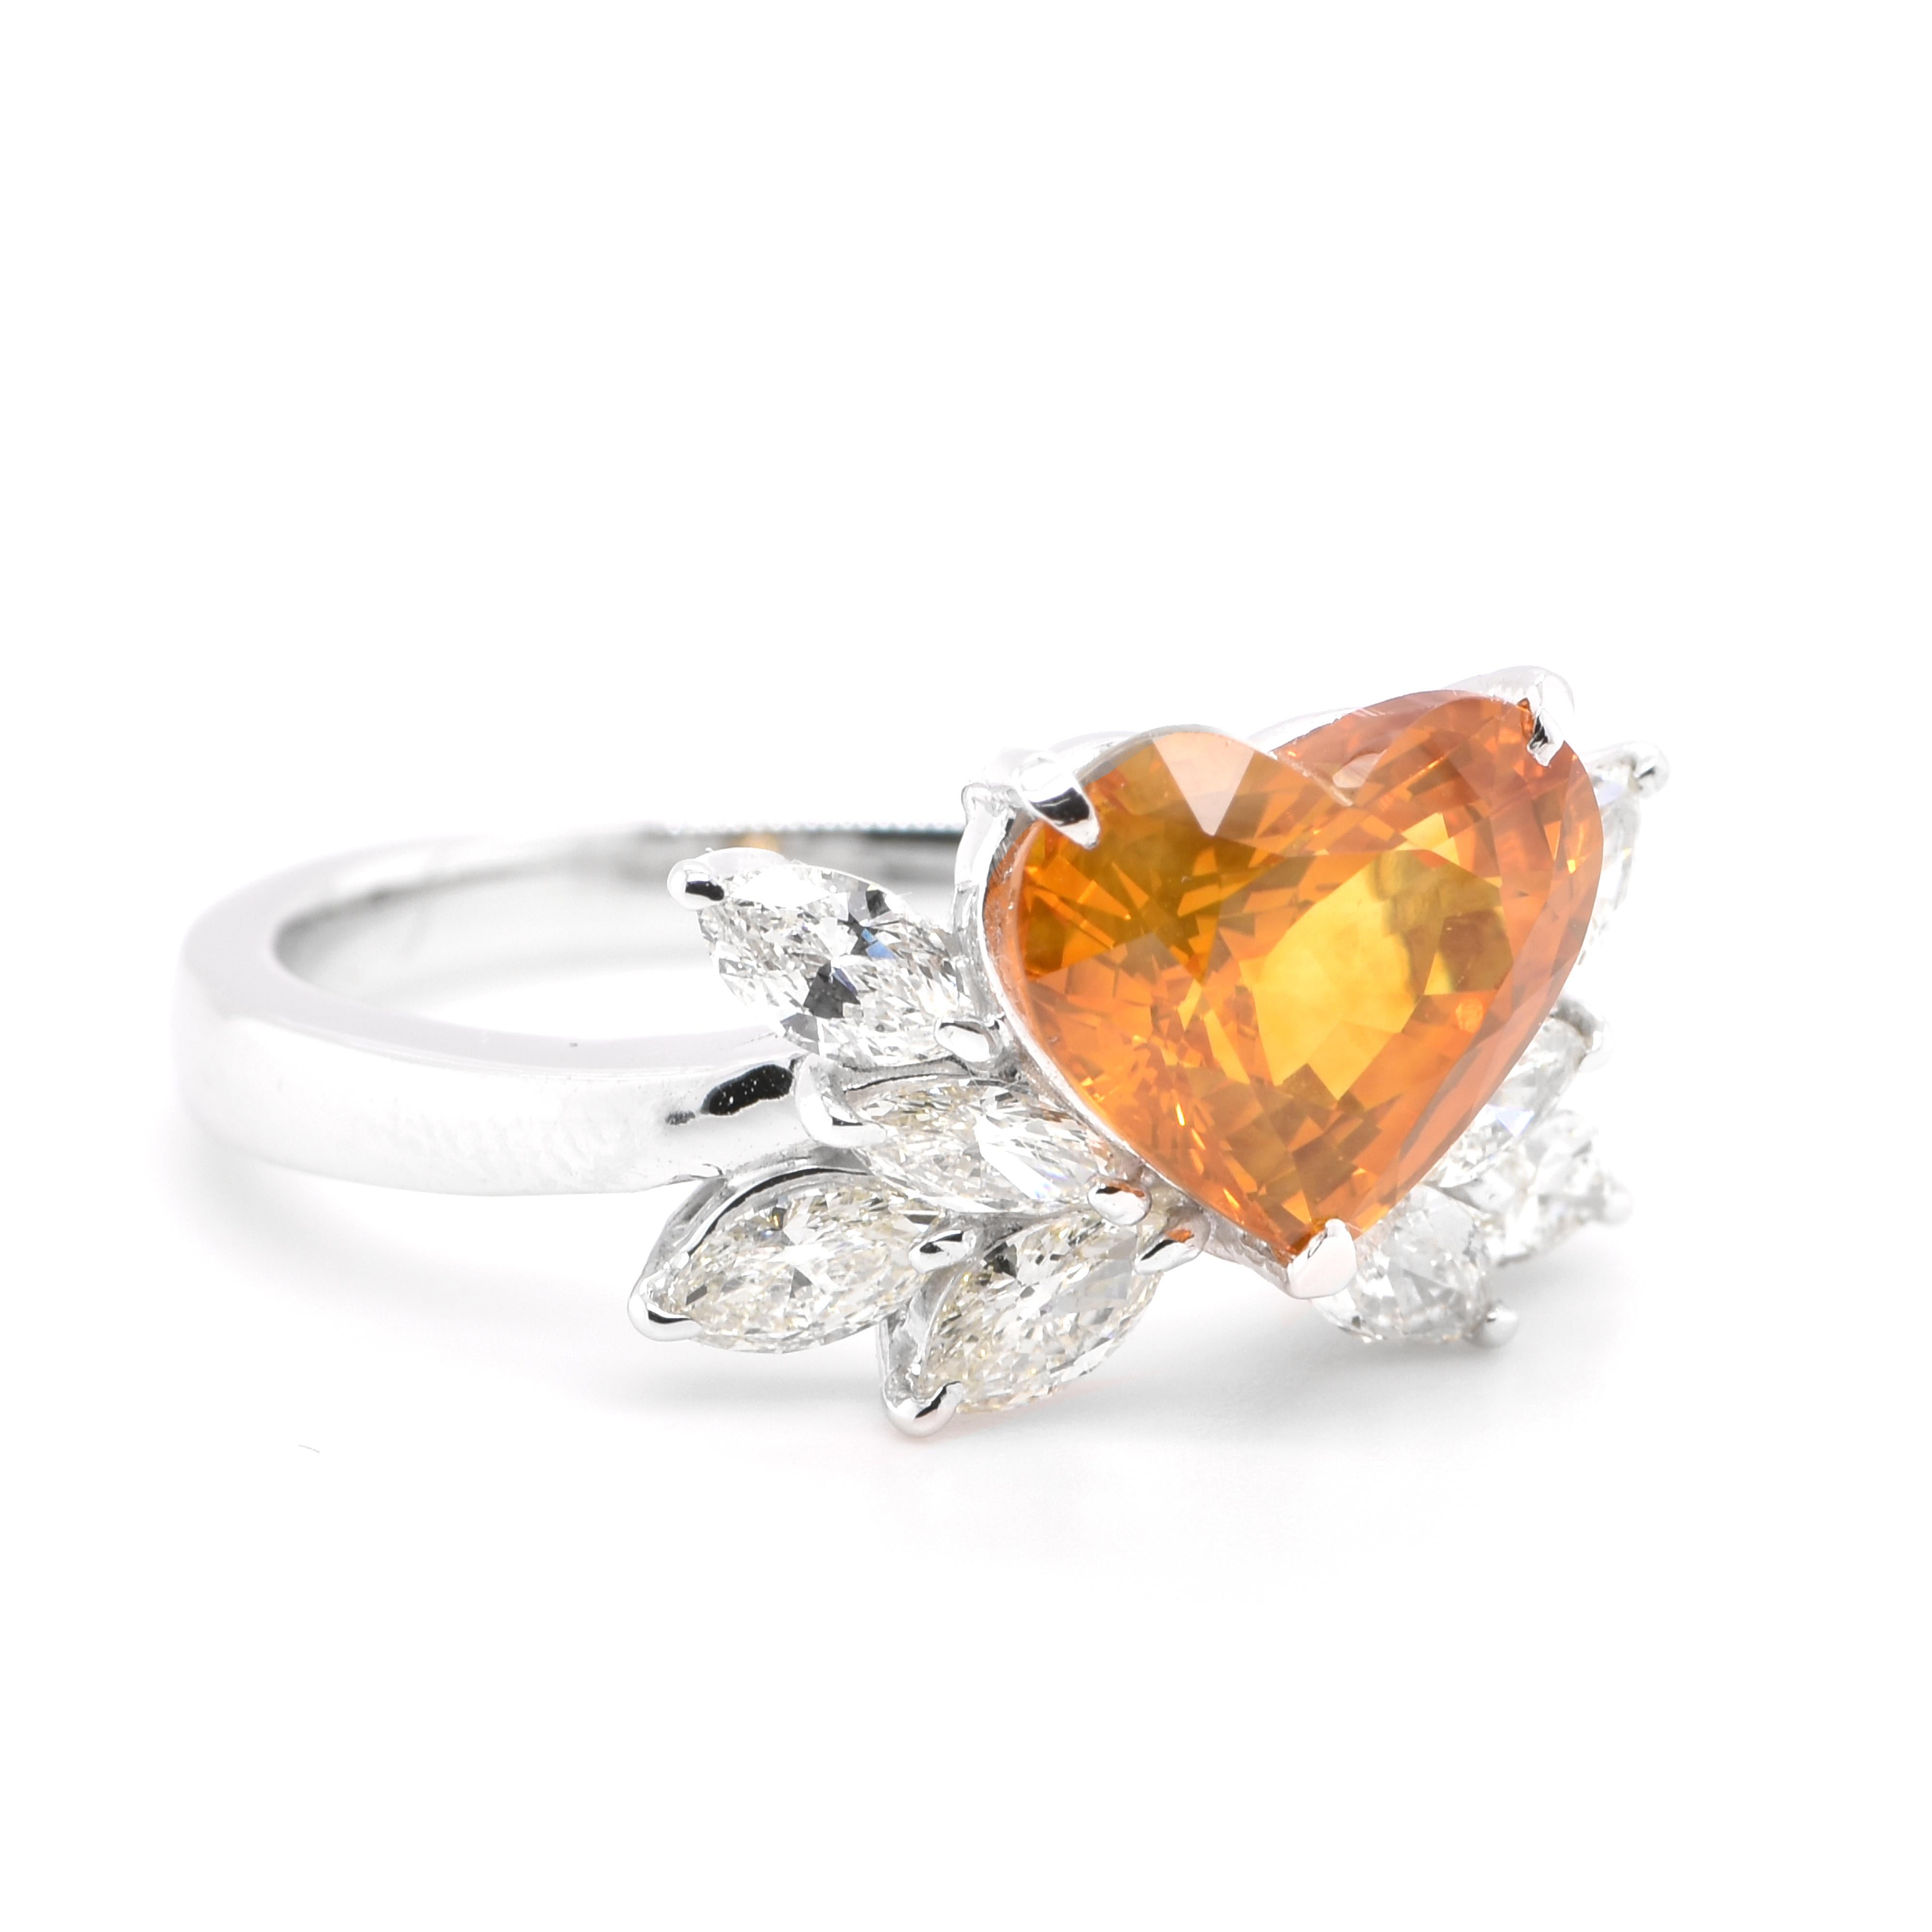 Modern 3.27 Carat Natural Heart-Cut Golden Sapphire and Diamond Ring Set in Platinum